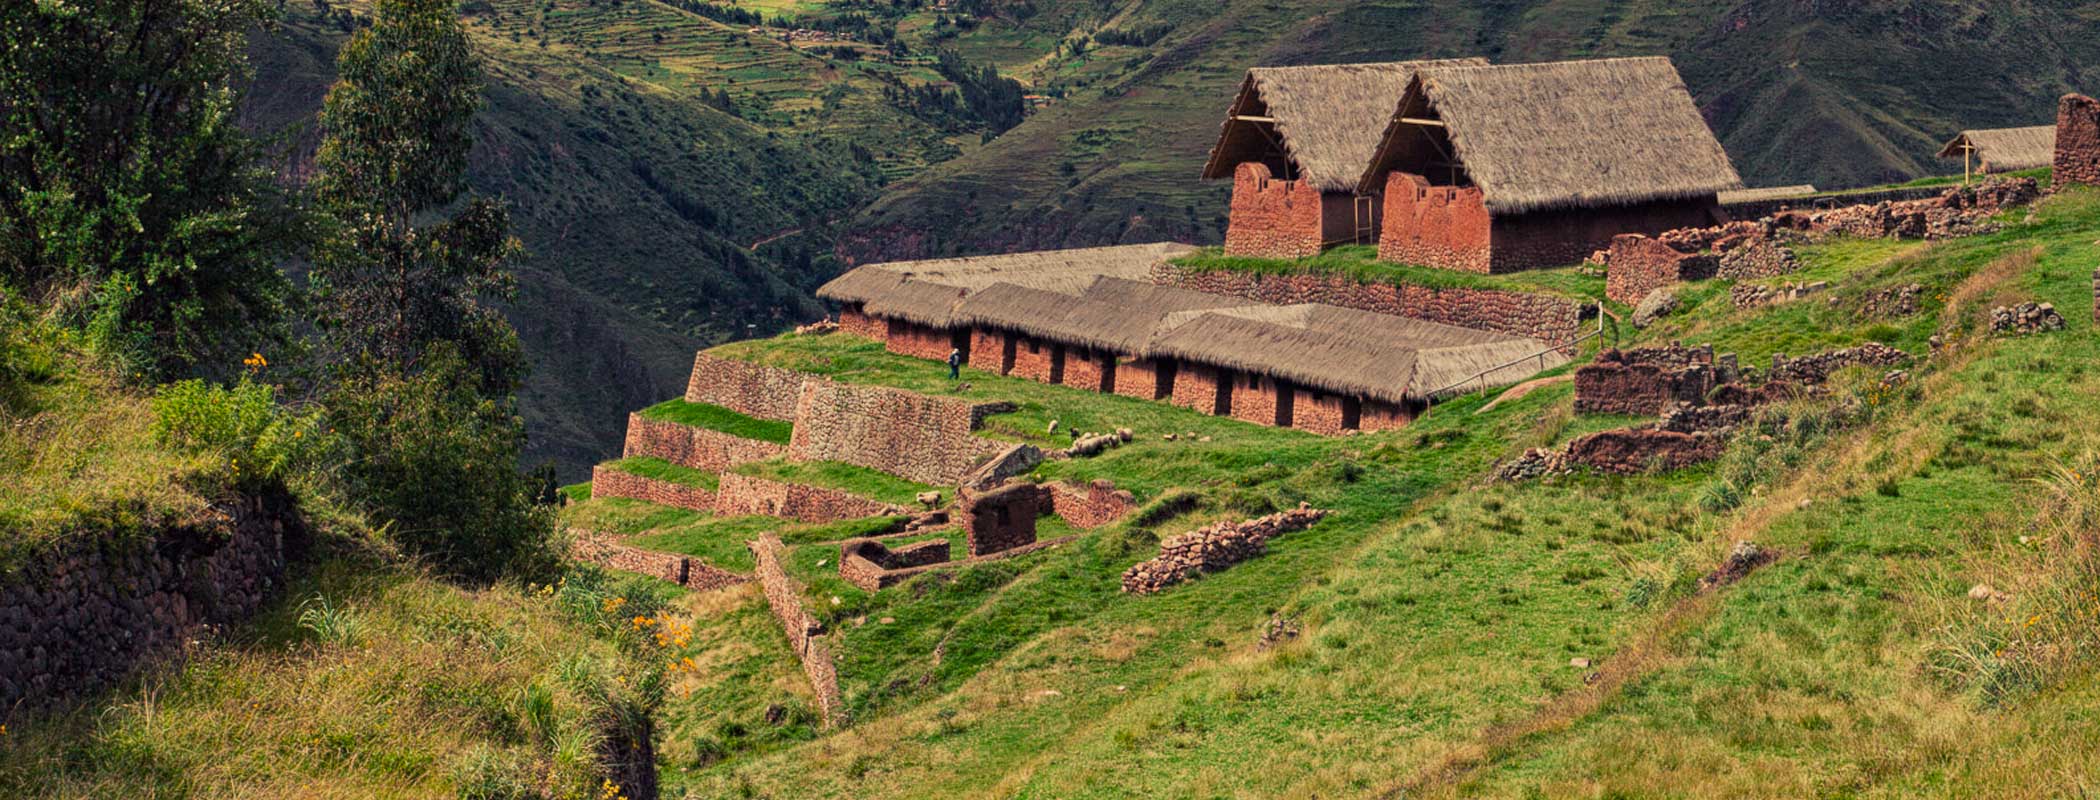 view huchuy qosqo archaeological complex in cusco